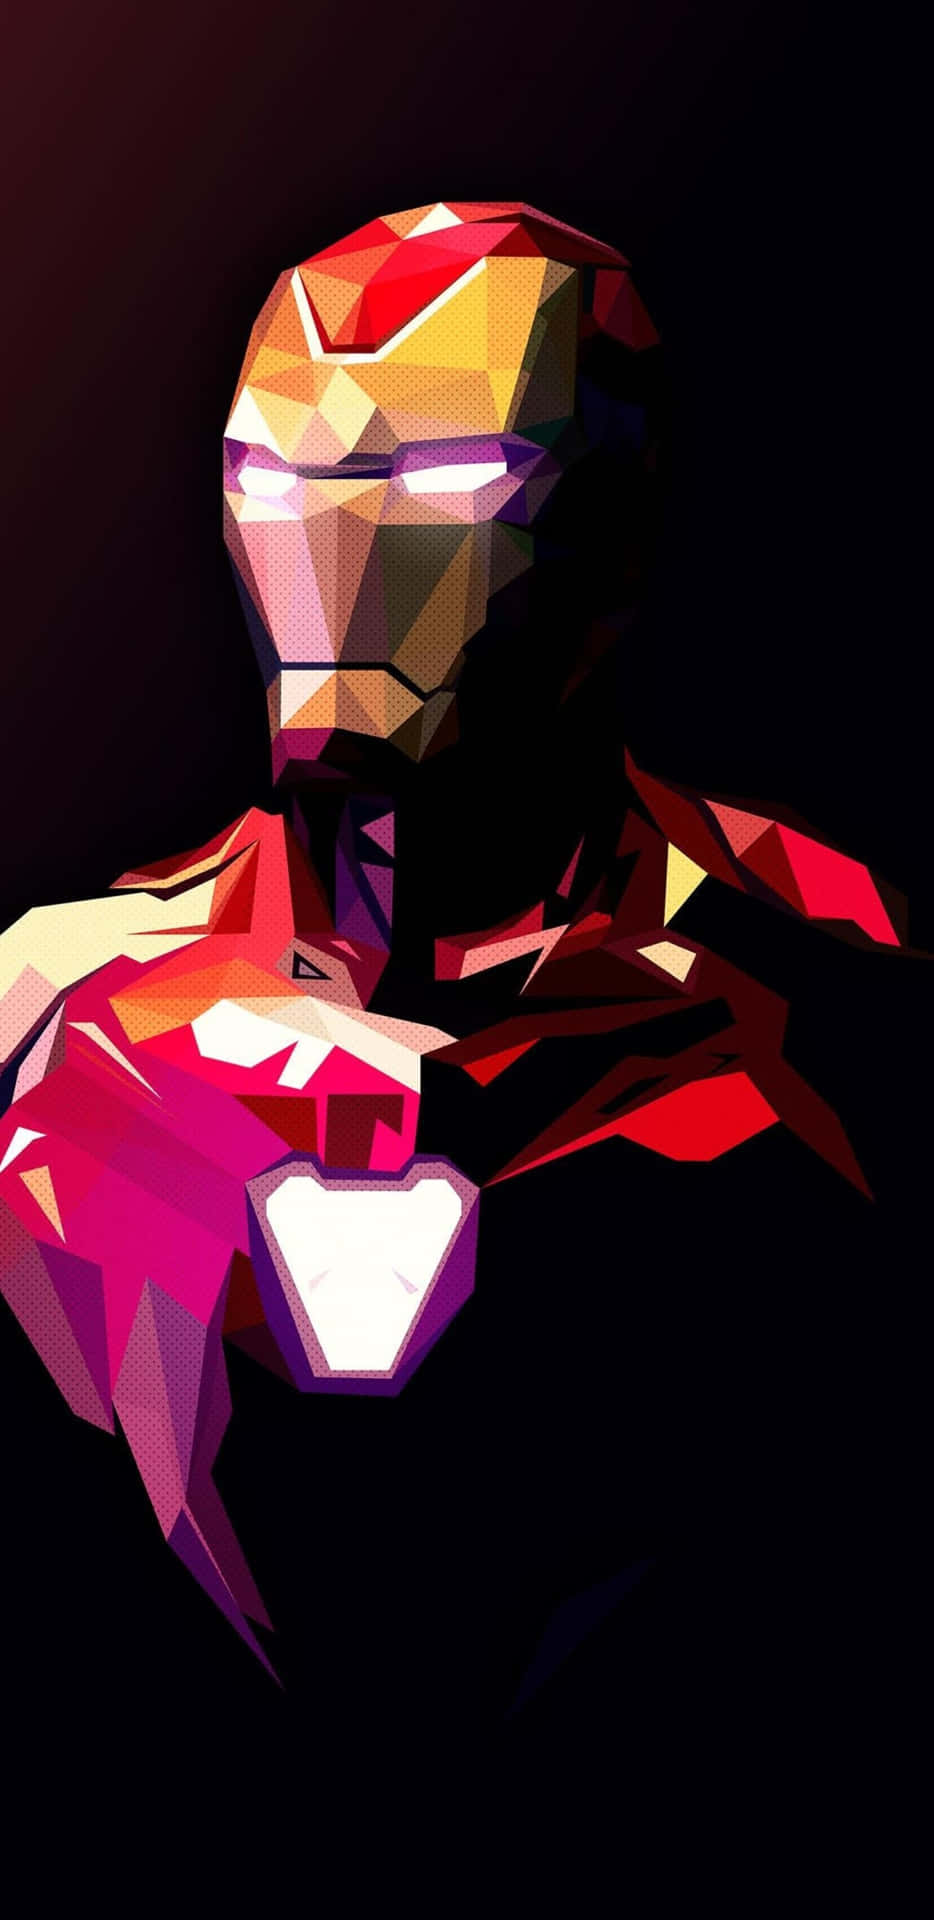 Pixel3xl Iron Man Geometriskt Designbakgrund.